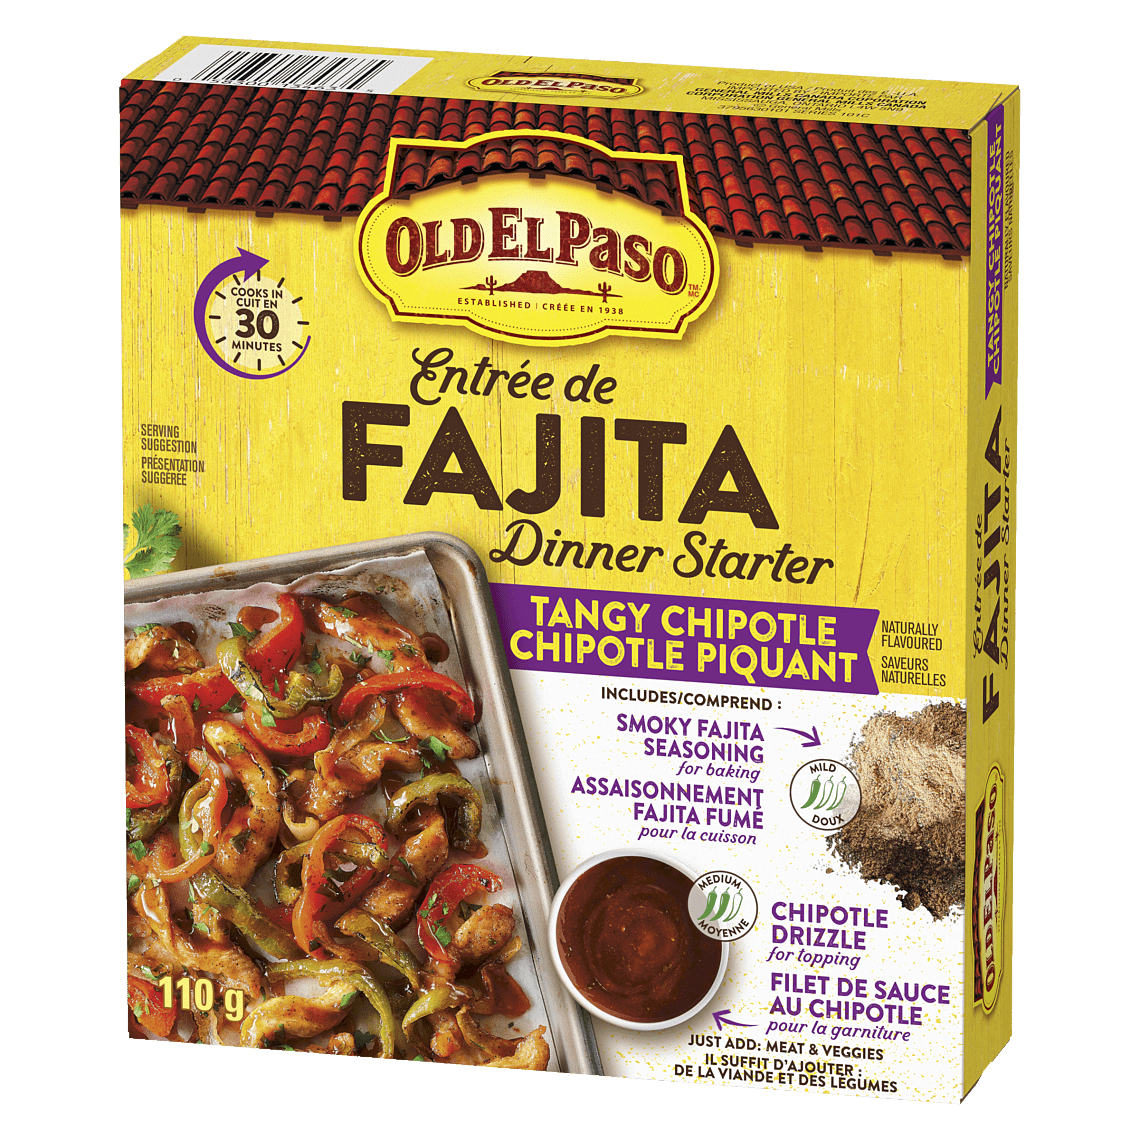 Fajita Dinner Starter – Tangy Chipotle